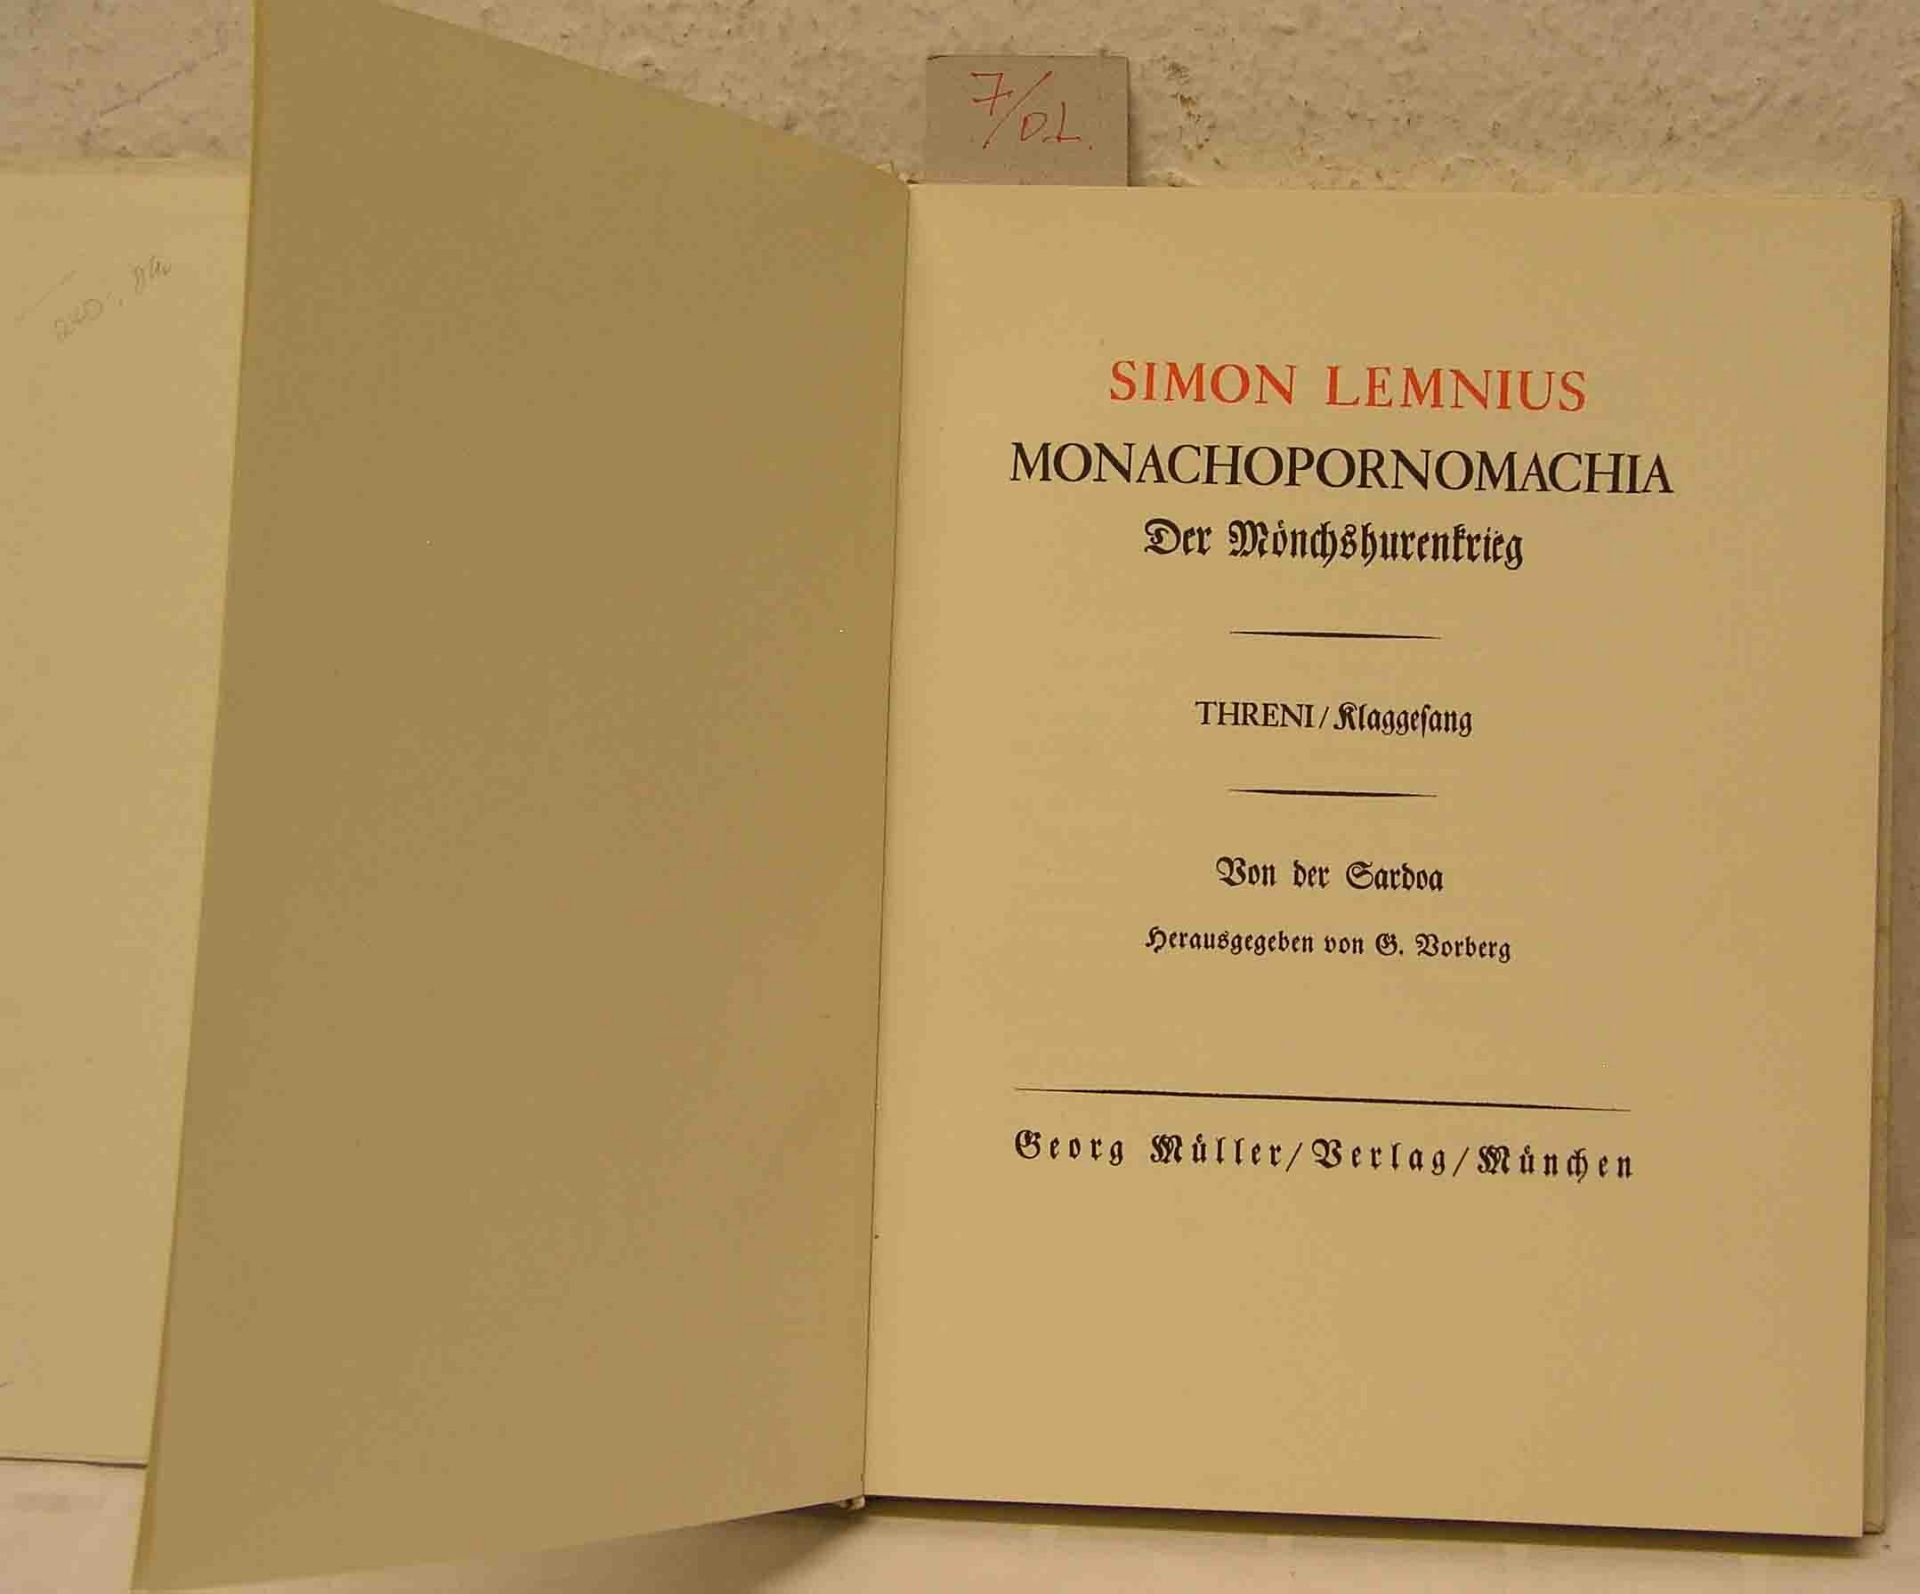 Lemnius, Simon: "Der Mönchshurenkrieg". Monachopornomachia - Threni/Klagegesang, GeorgMüller,